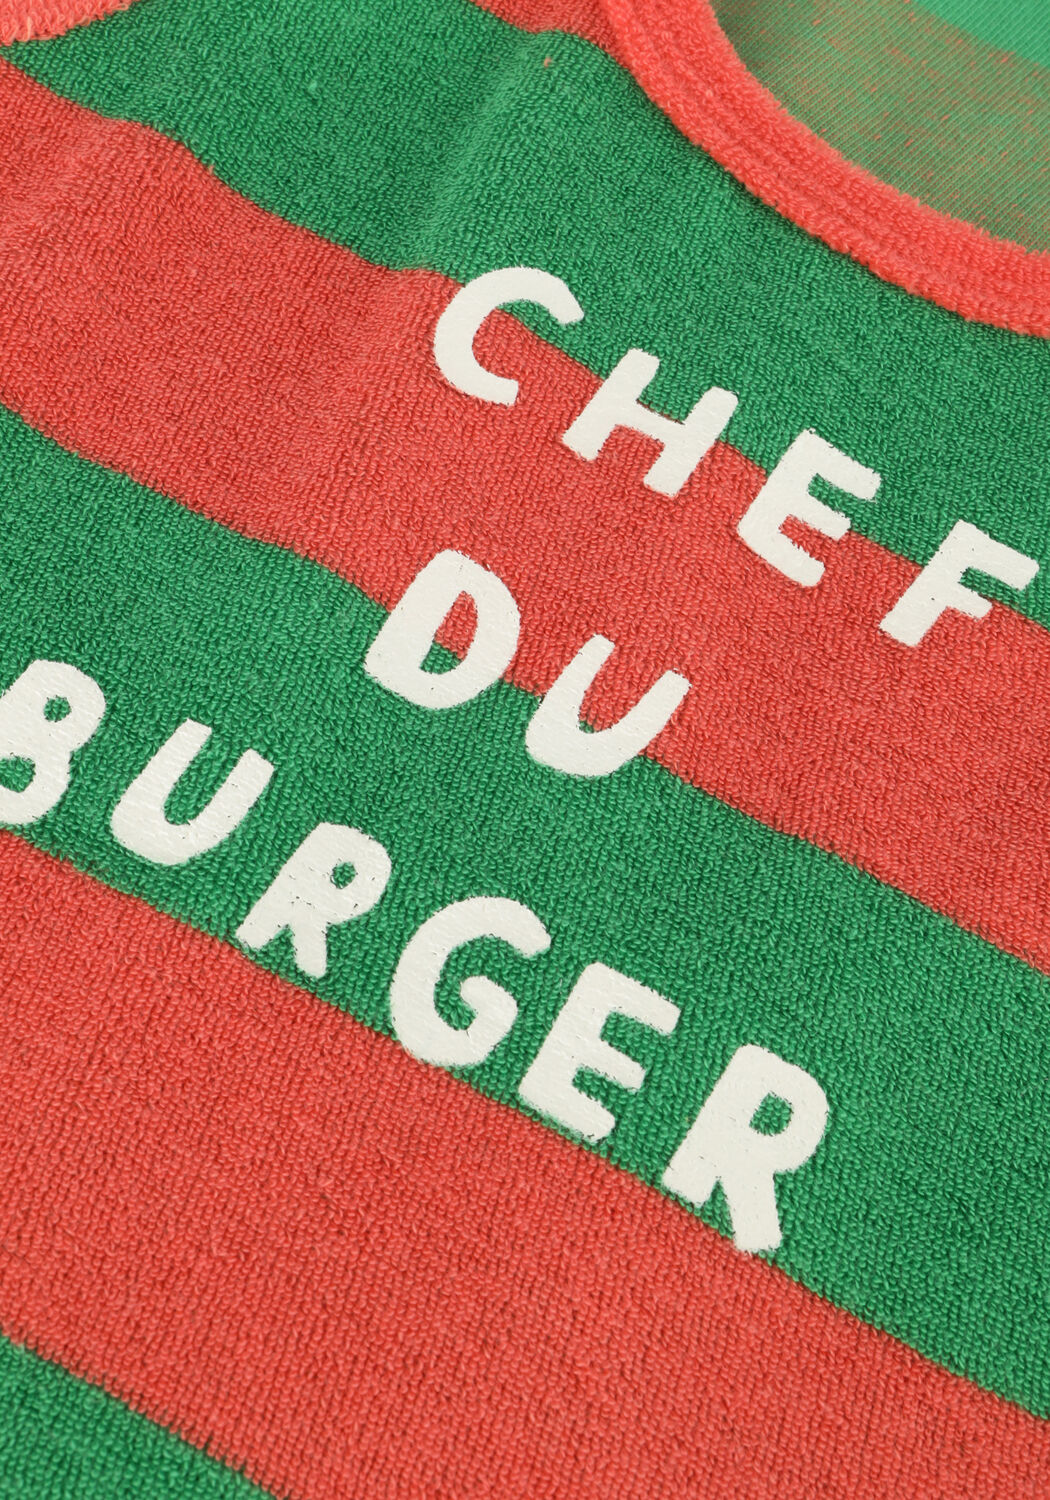 Sproet & Sprout Jongens Polo's & T-shirts Tanktop Boys Chef Du Burger Koraal